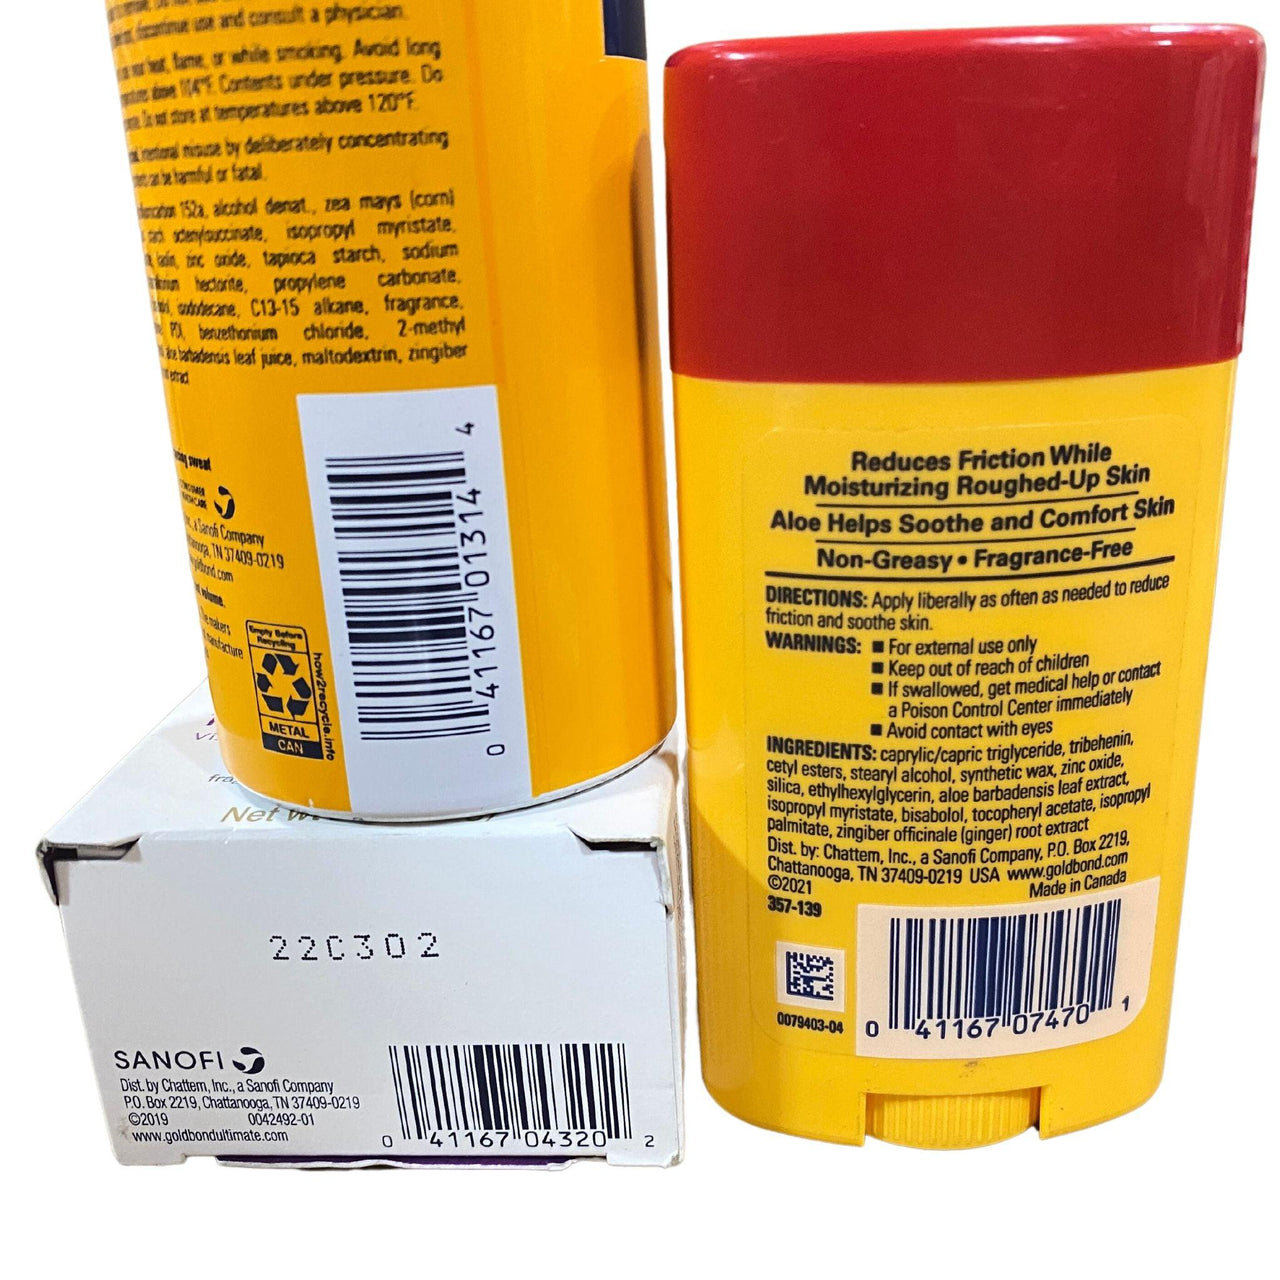 Assorted GoldBond Lotions, Hygiene Products ( 27 Pcs Box ) - Discount Wholesalers Inc